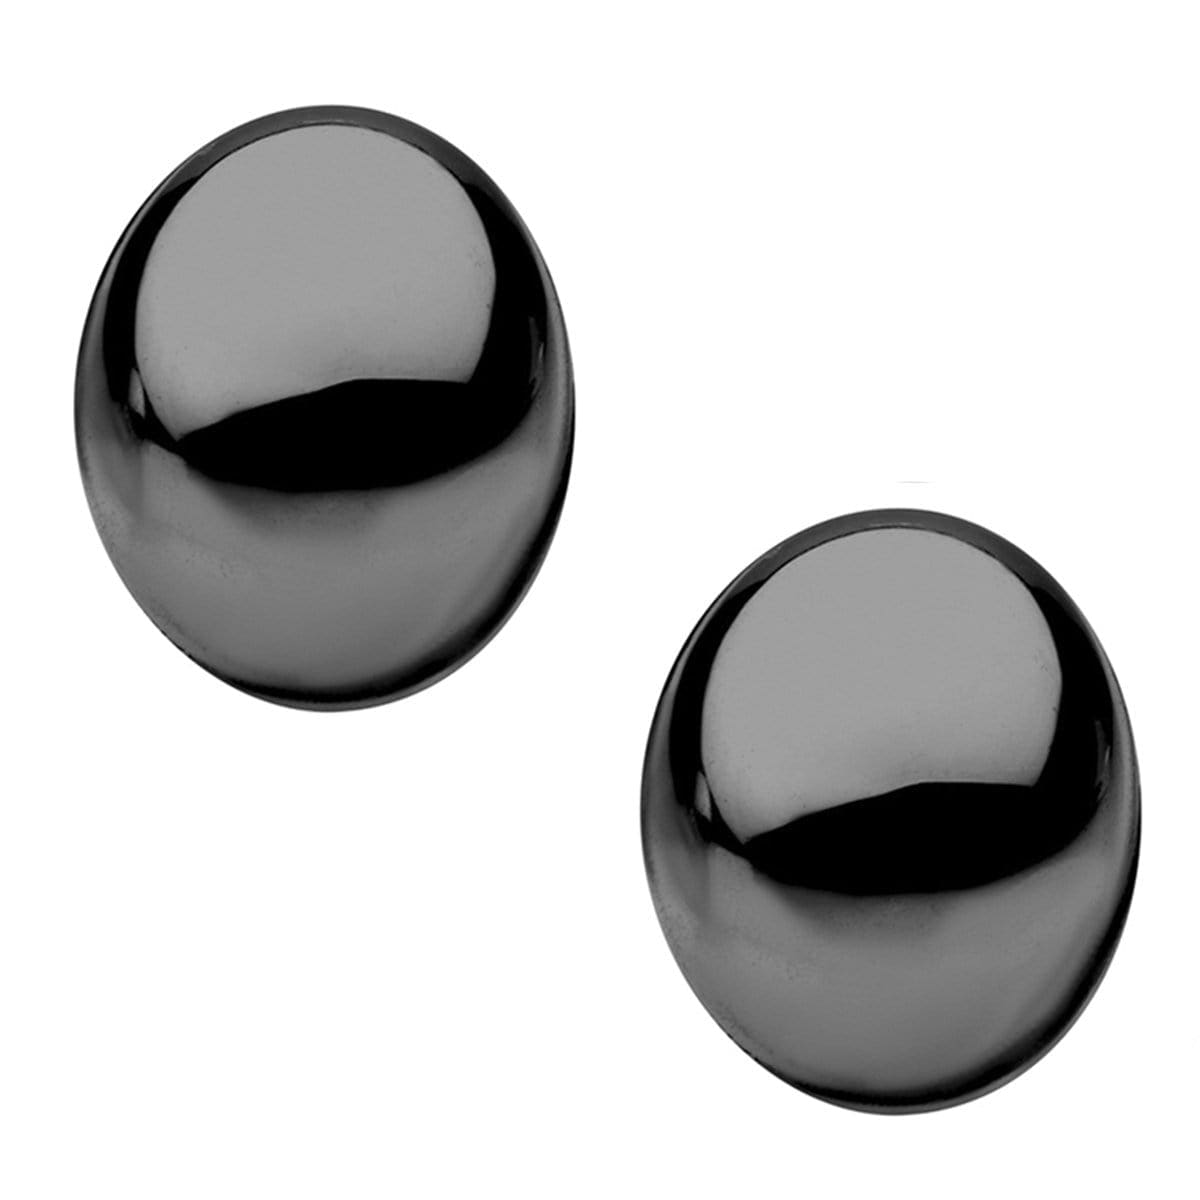 INOX JEWELRY Earrings Black Stainless Steel Small Oval Dome Studs SSE4808K